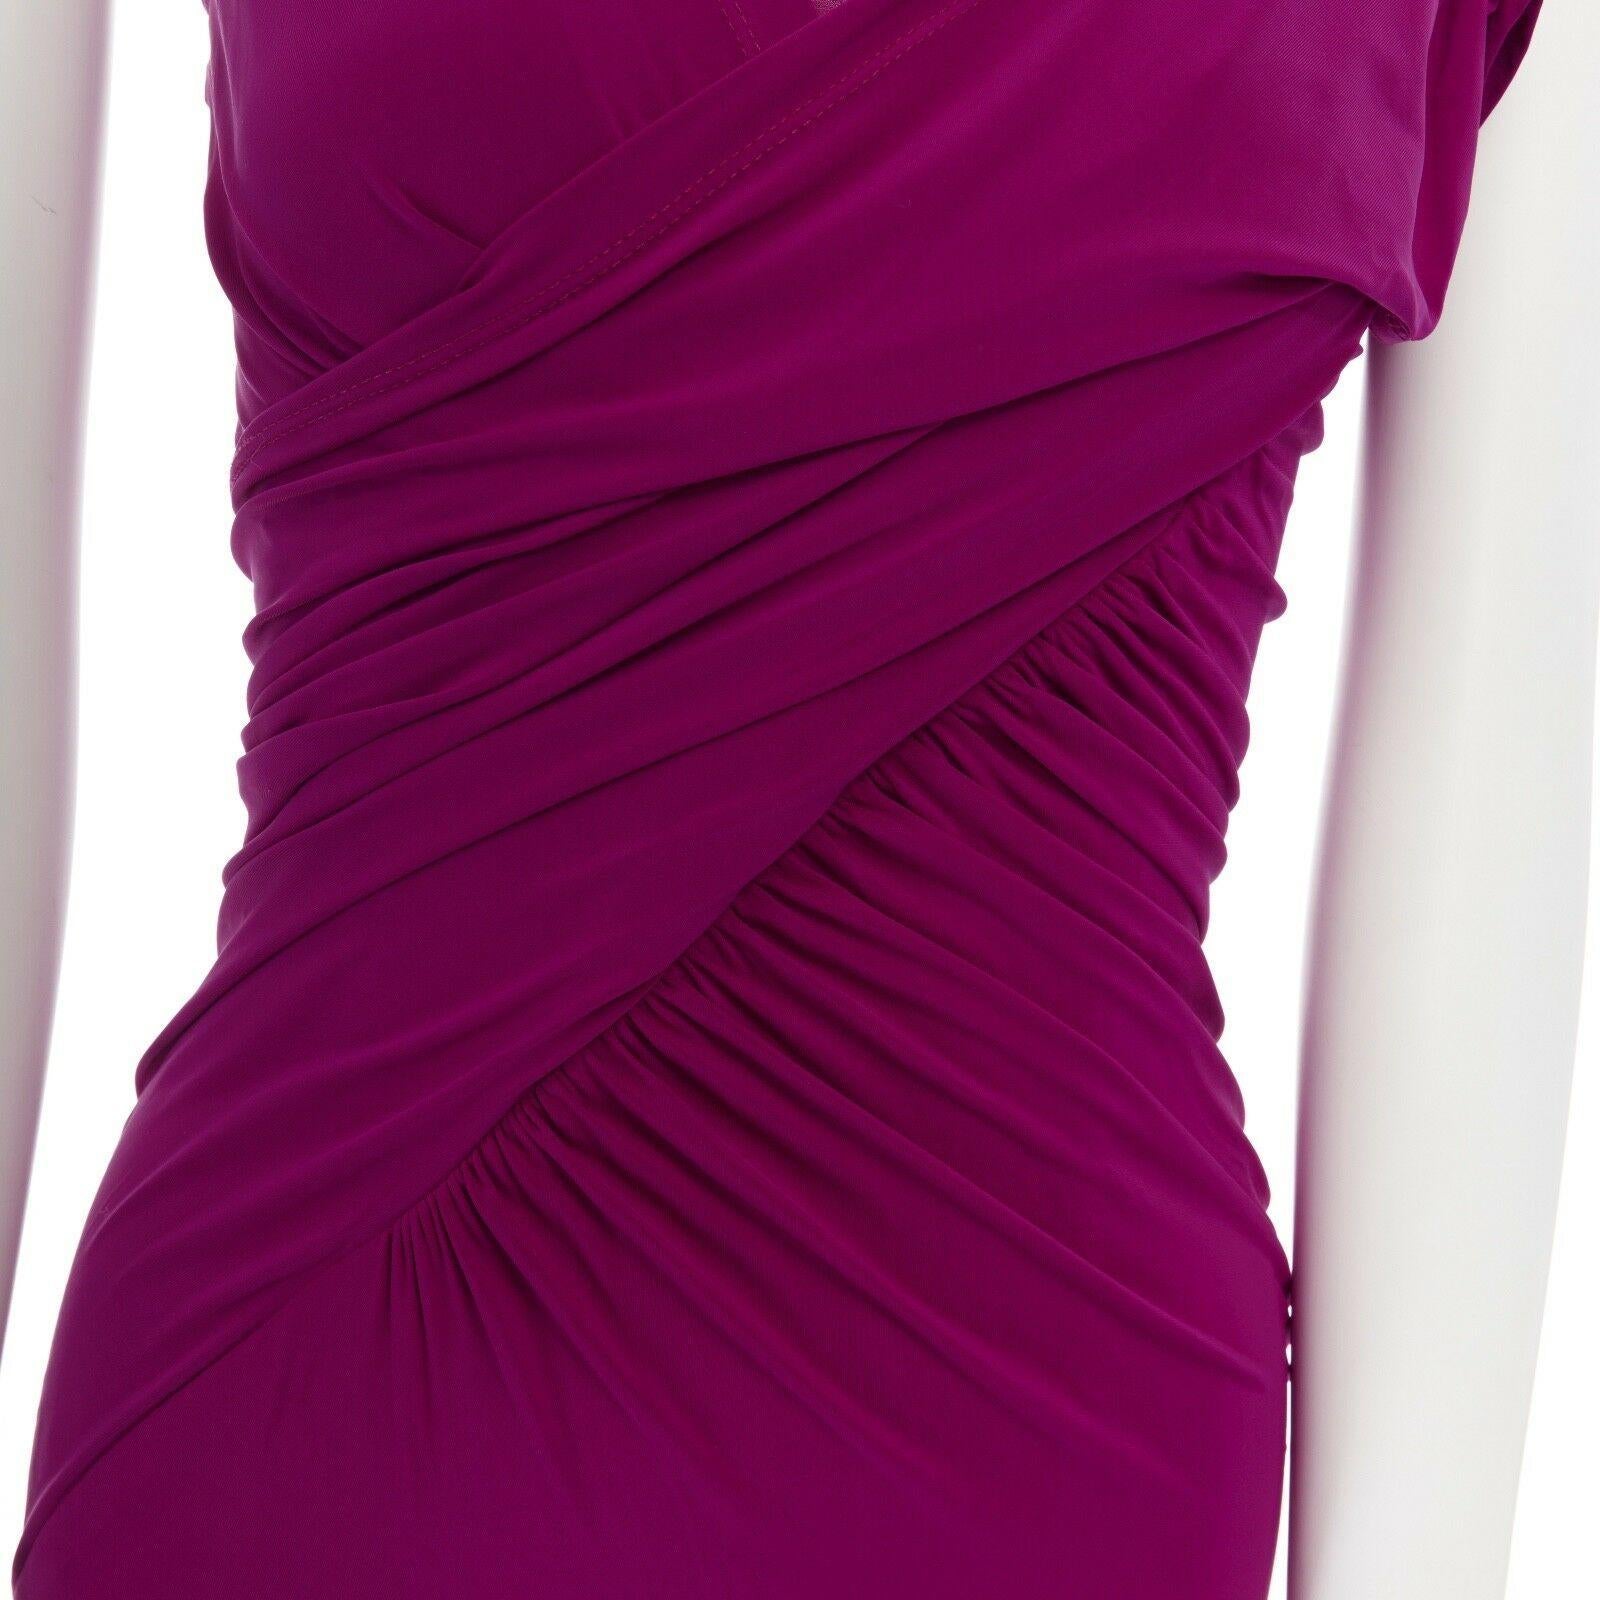 DONNA KARAN fuscia pink viscose wrapped draped bodycon evening gown dress XS 2